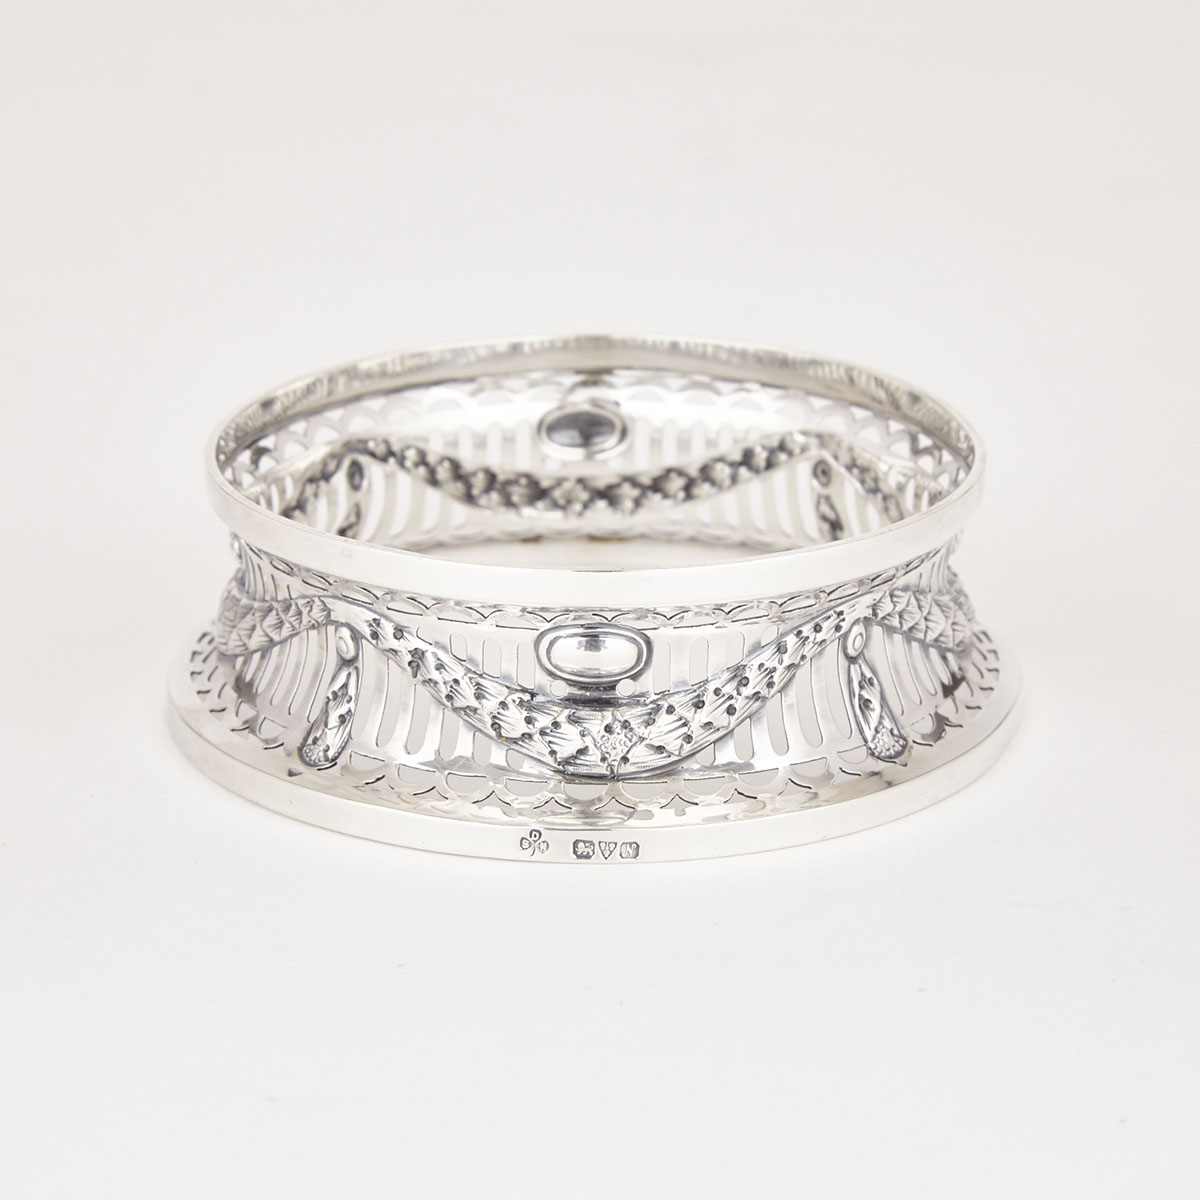 English Silver Small Pierced Dish Ring, Sharman Dermott Neill, Chester, 1913